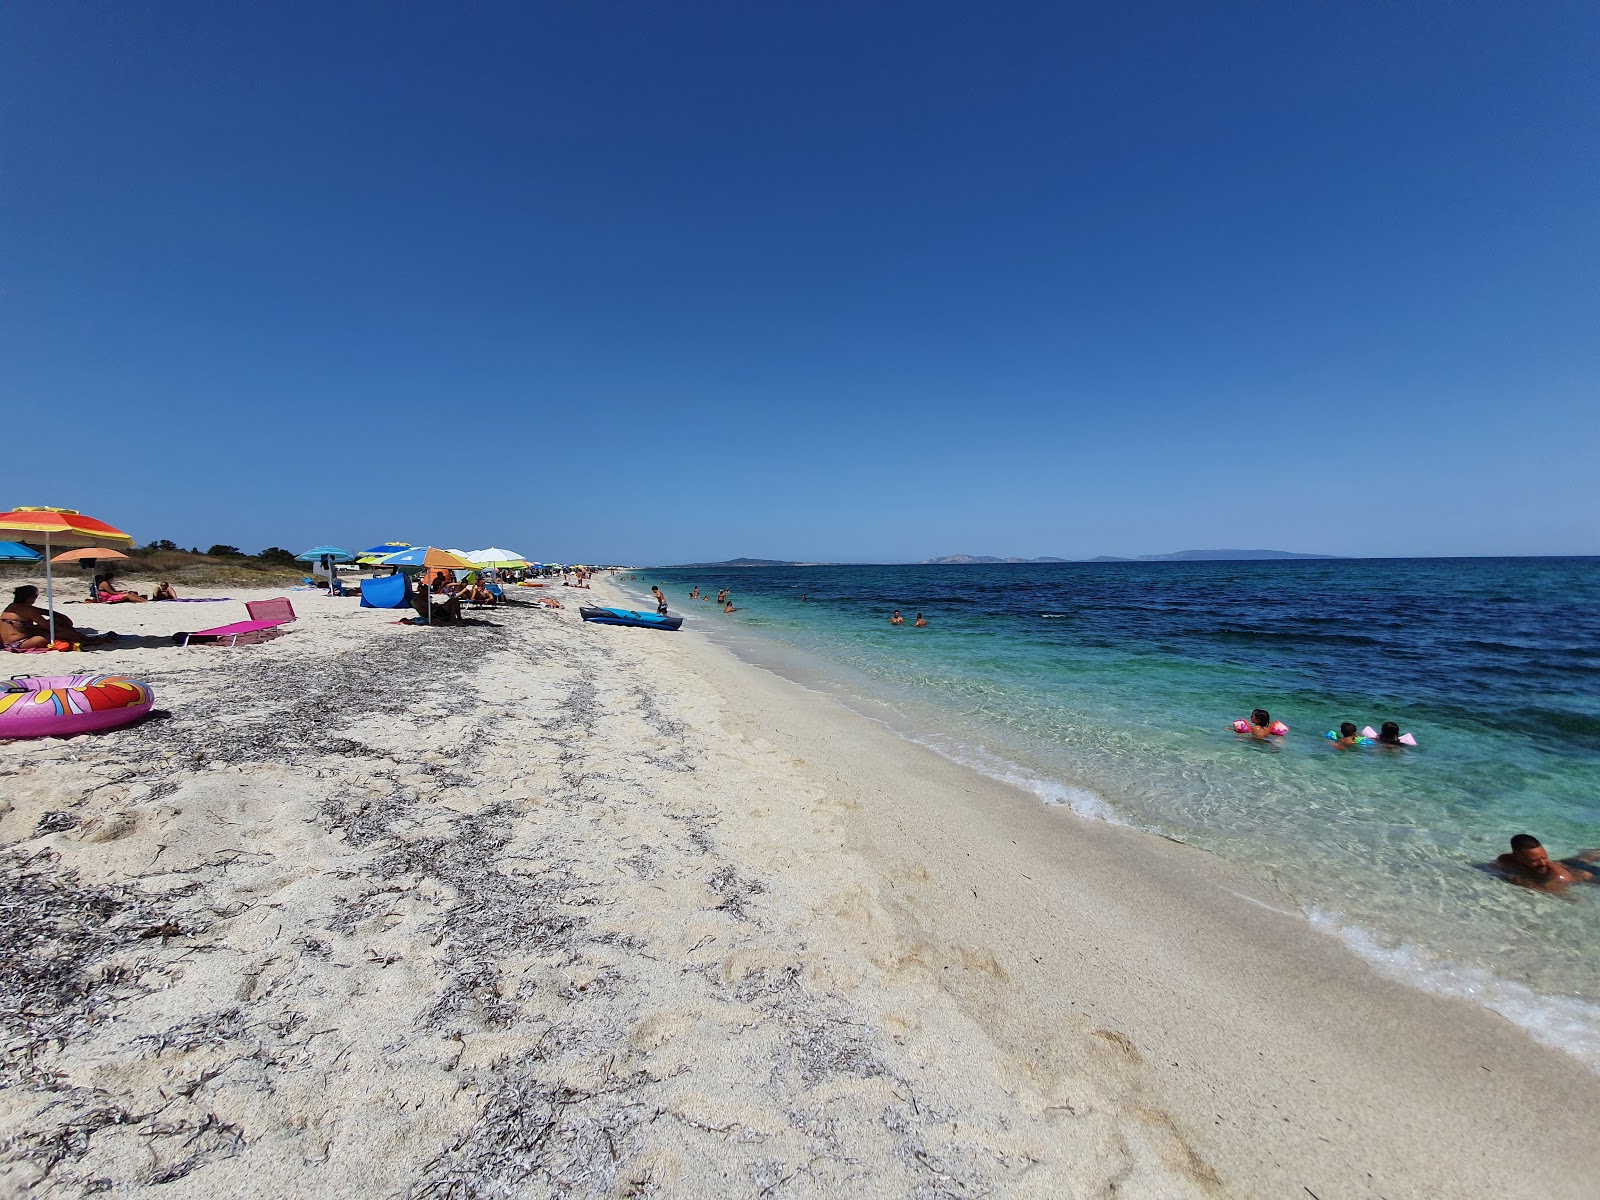 Photo of Spiaggia di Stagno di Pilo with turquoise pure water surface